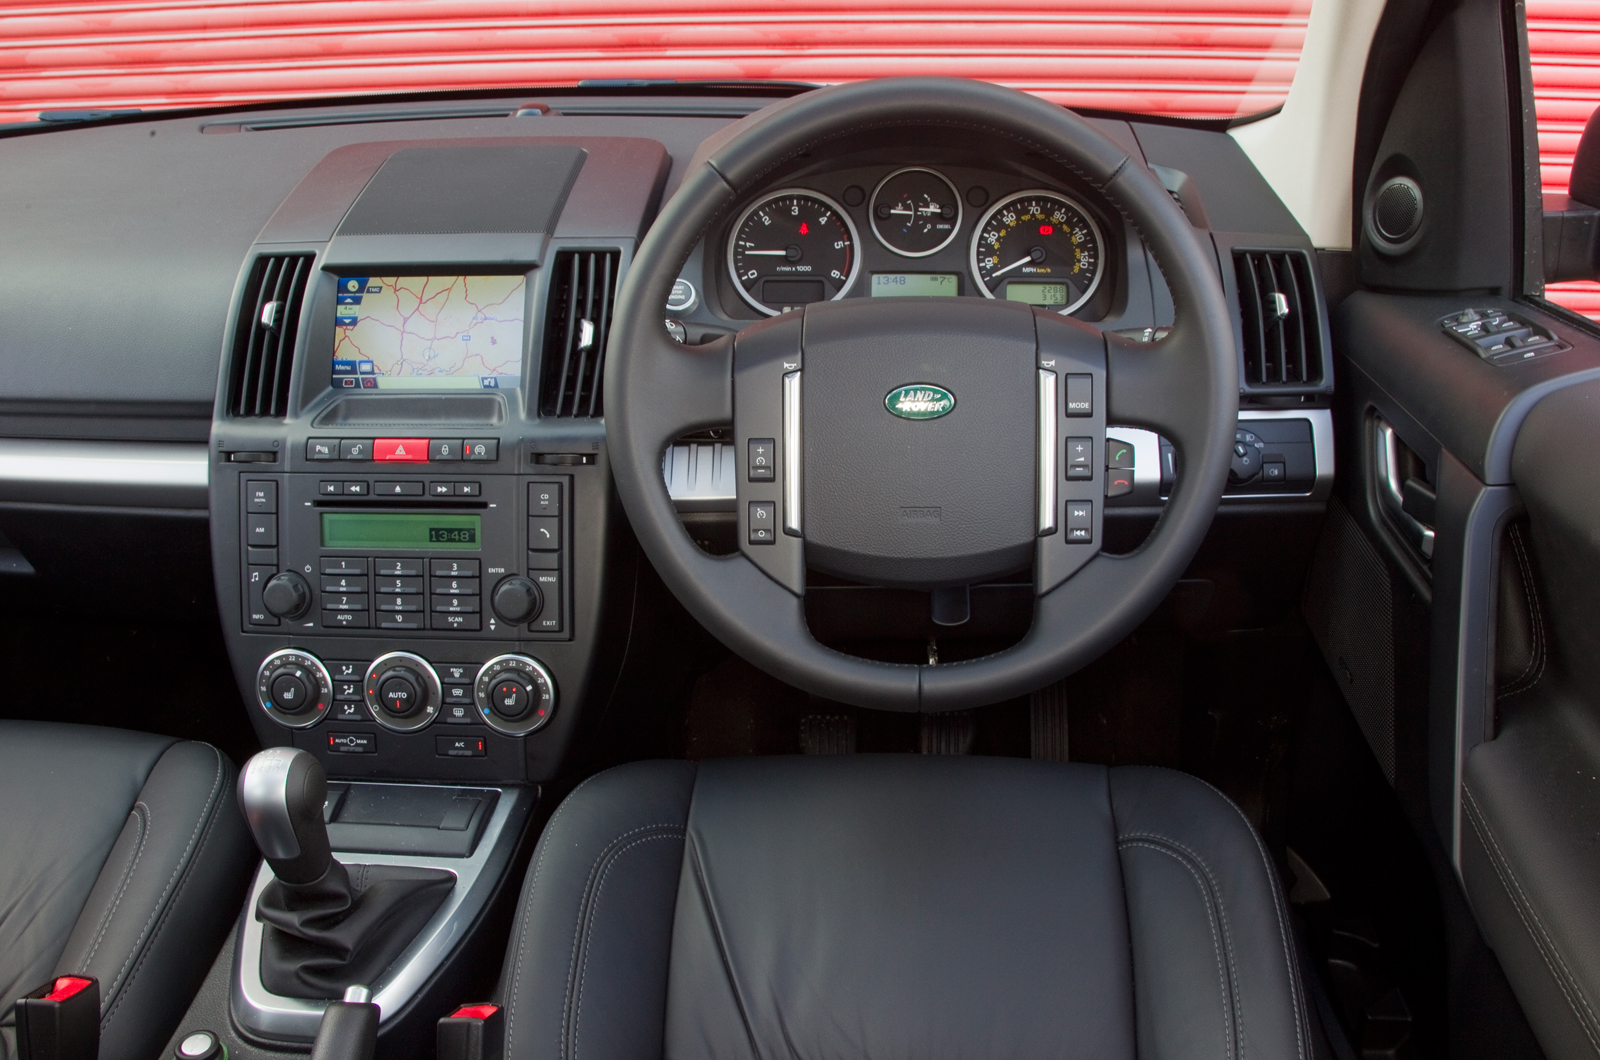 Land Rover Freelander dashboard